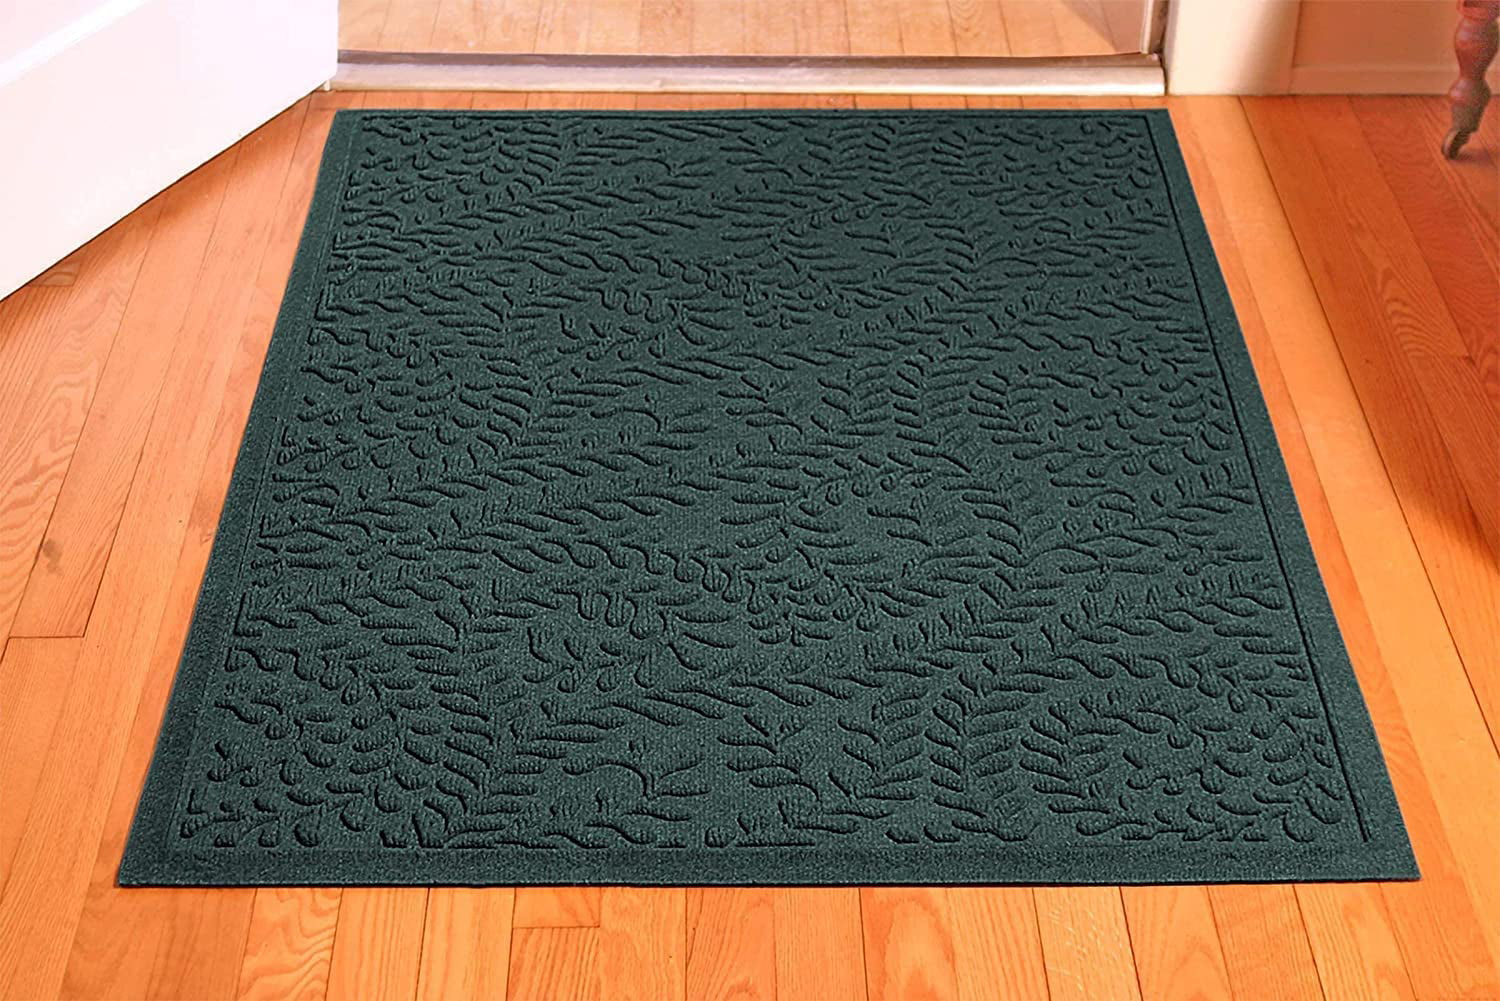  Bungalow Flooring Waterhog Door Mat, 2' x 3' Made in USA,  Durable and Decorative Floor Covering, Skid Resistant, Indoor/Outdoor, Water-Trapping,  Ellipse Collection, Bluestone : Patio, Lawn & Garden